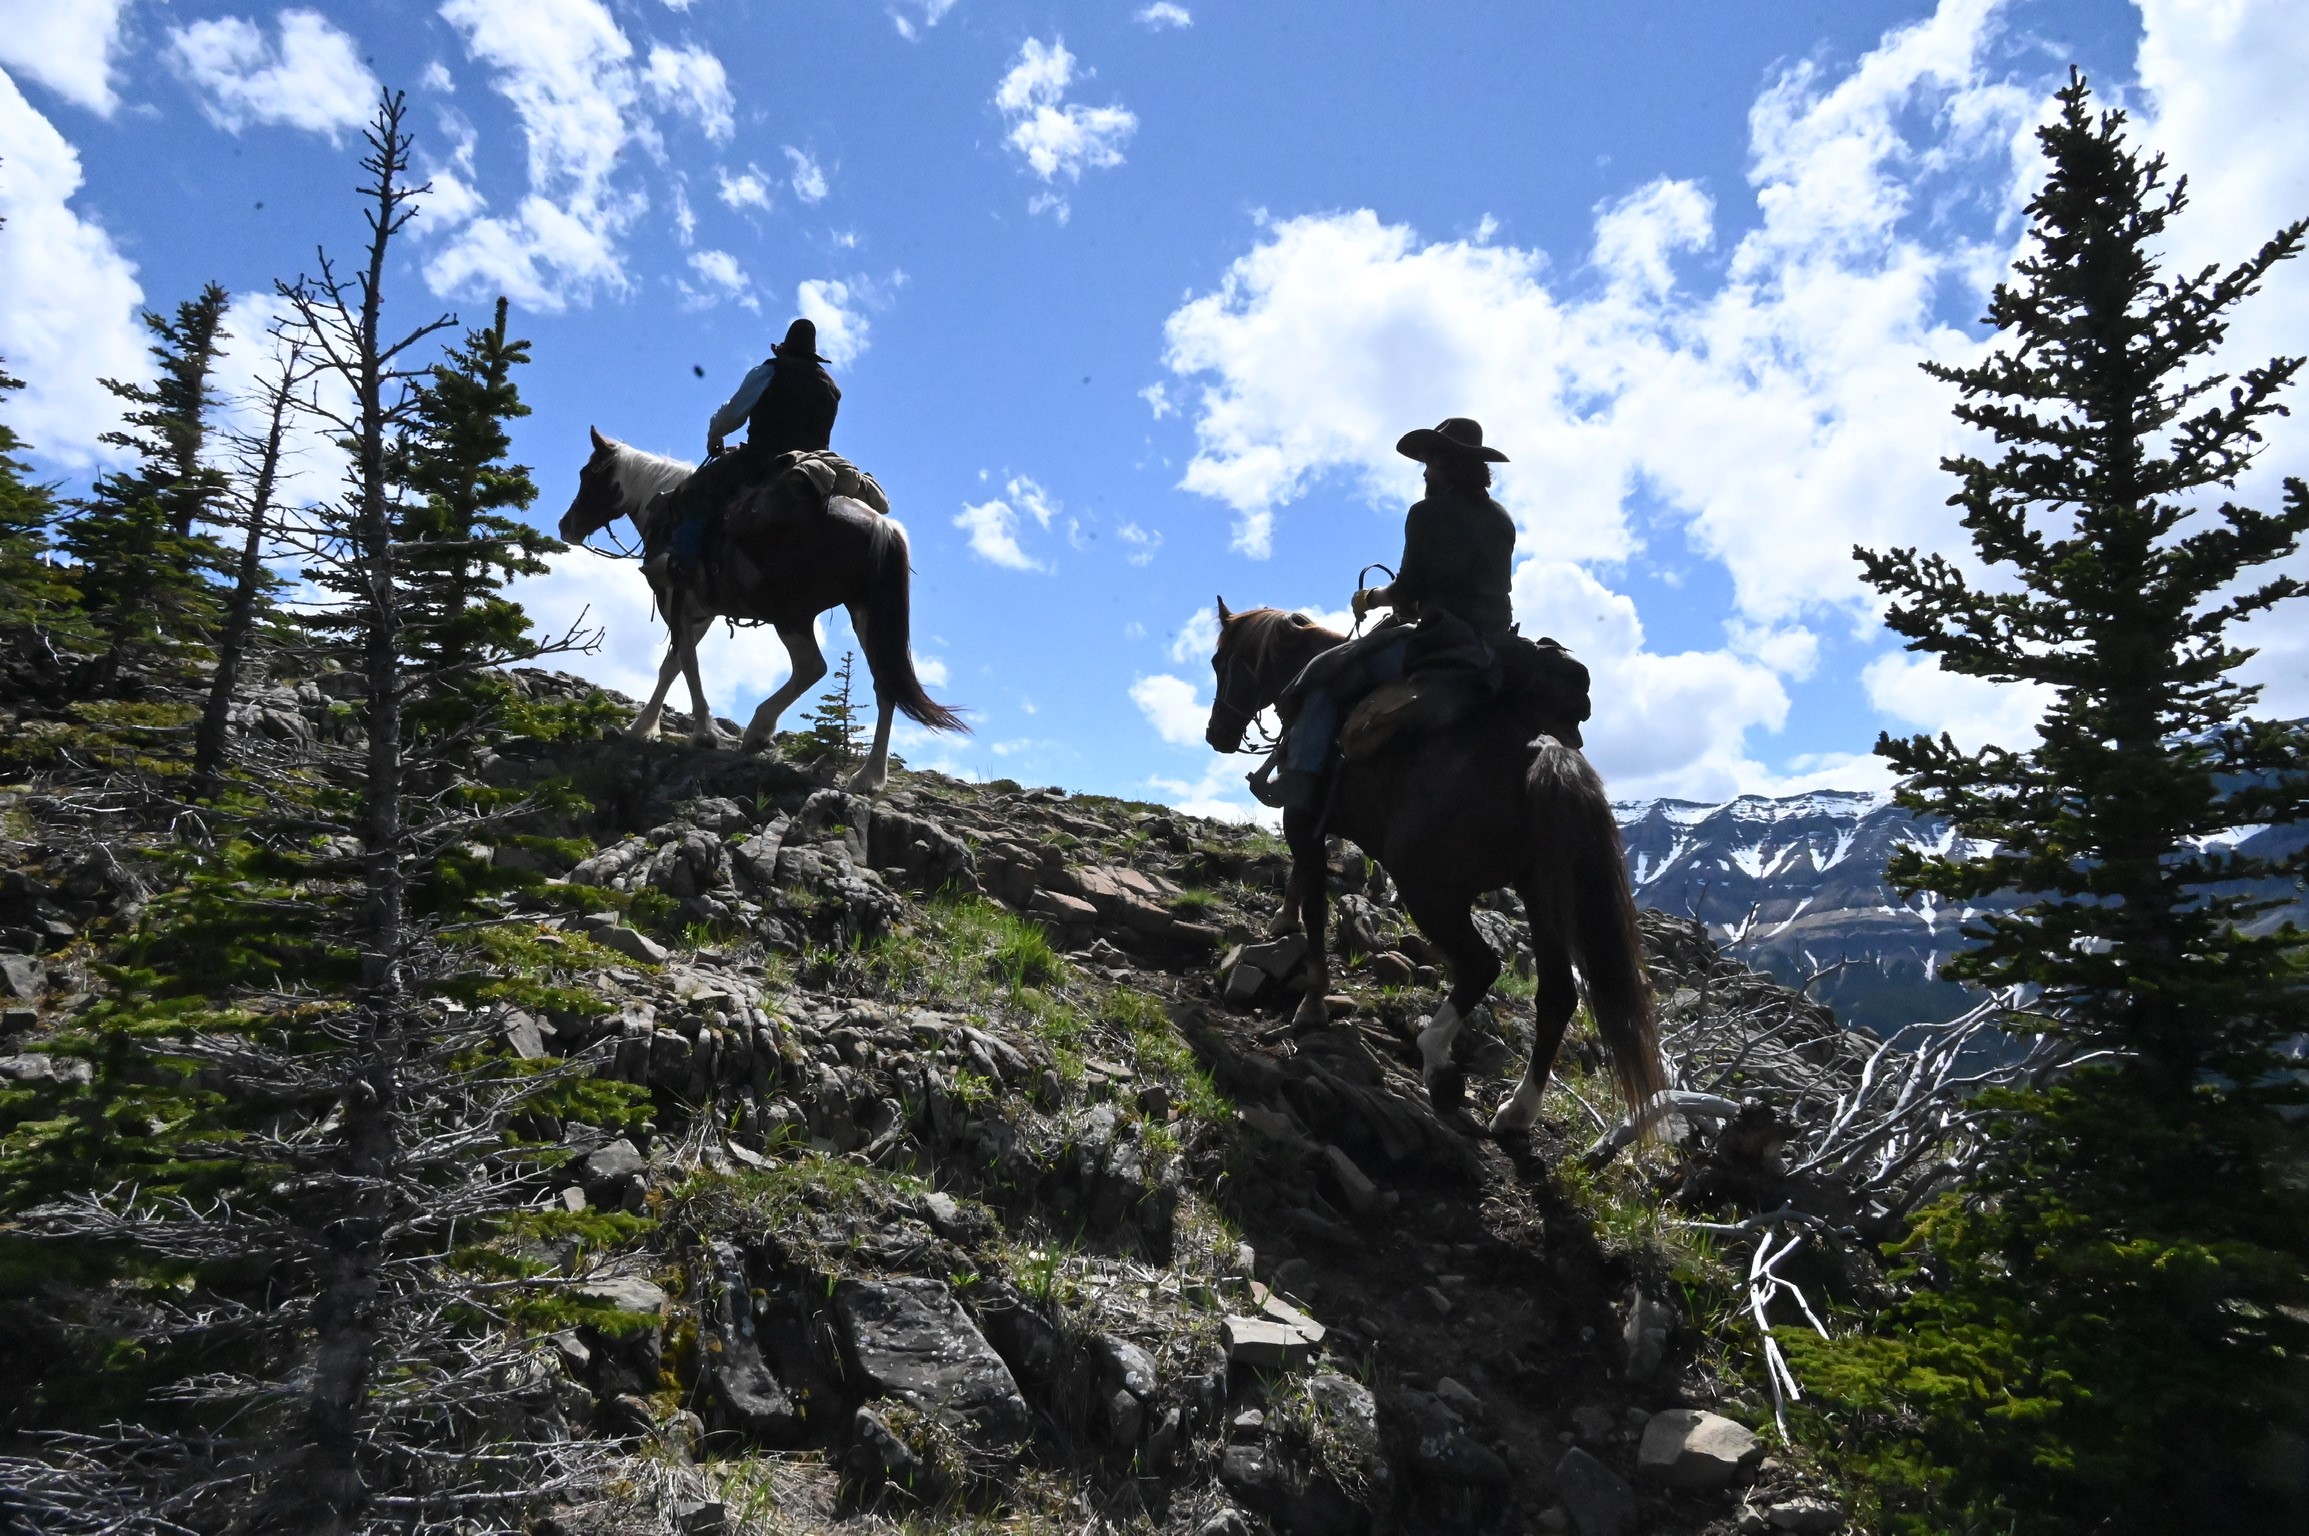 Horses in the Rockies